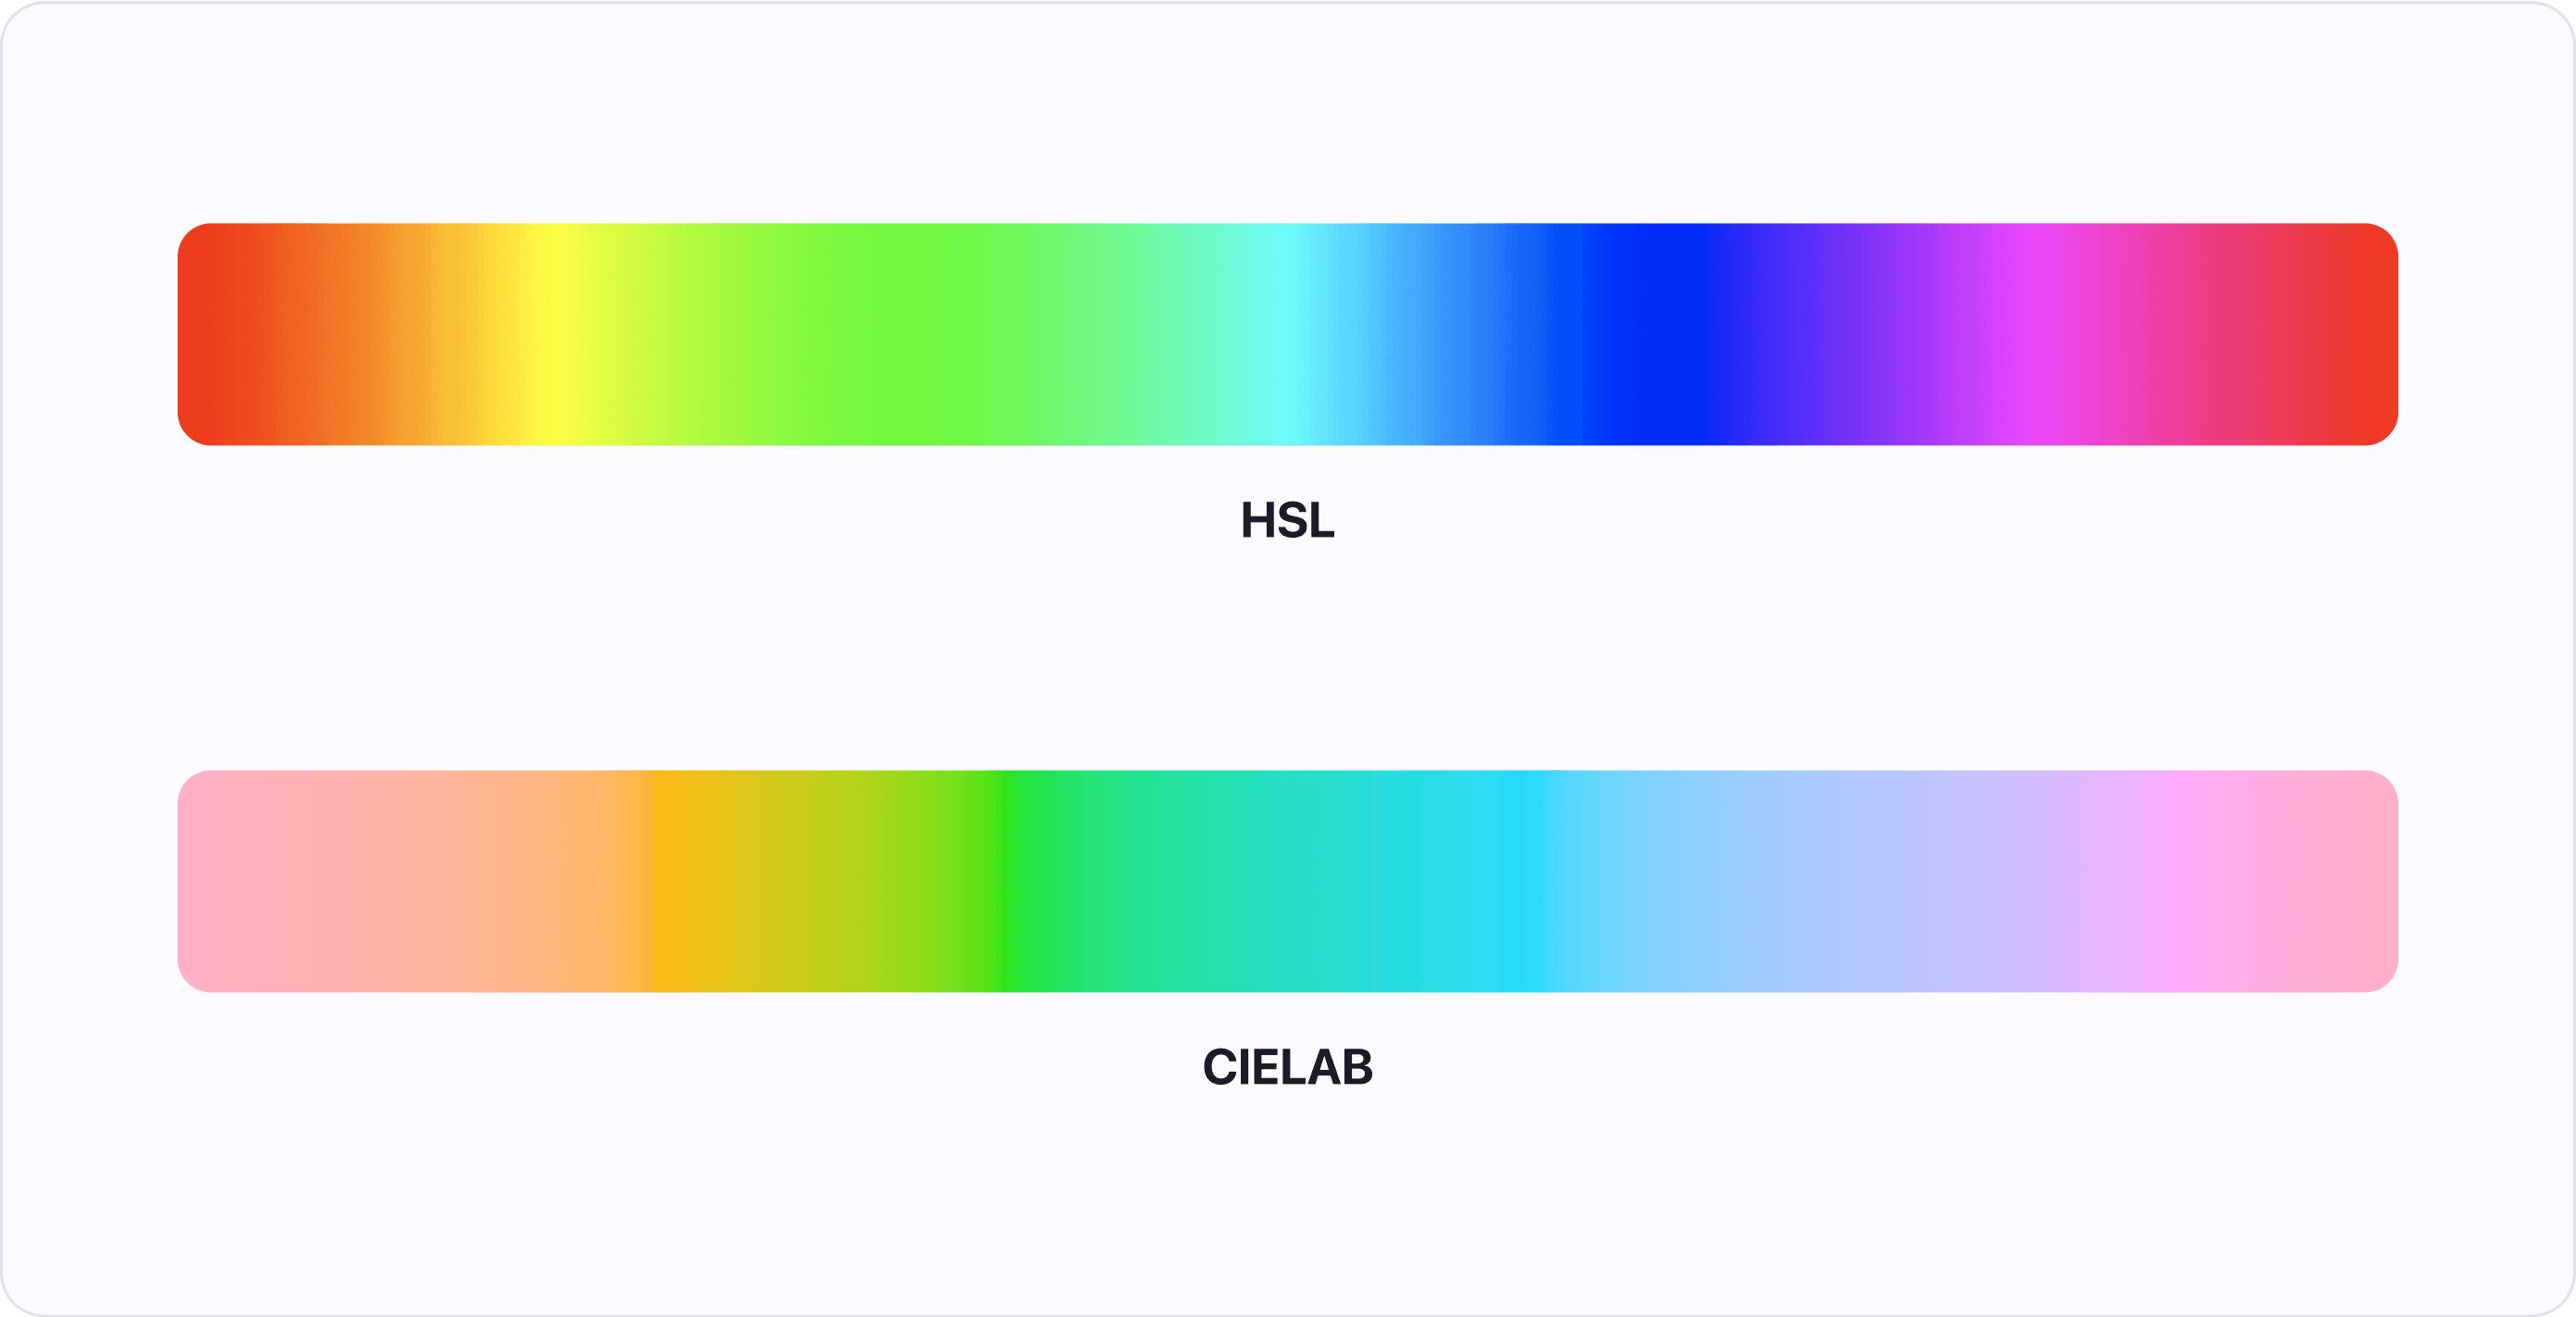 Comparison of HSL and CIELAB color spaces